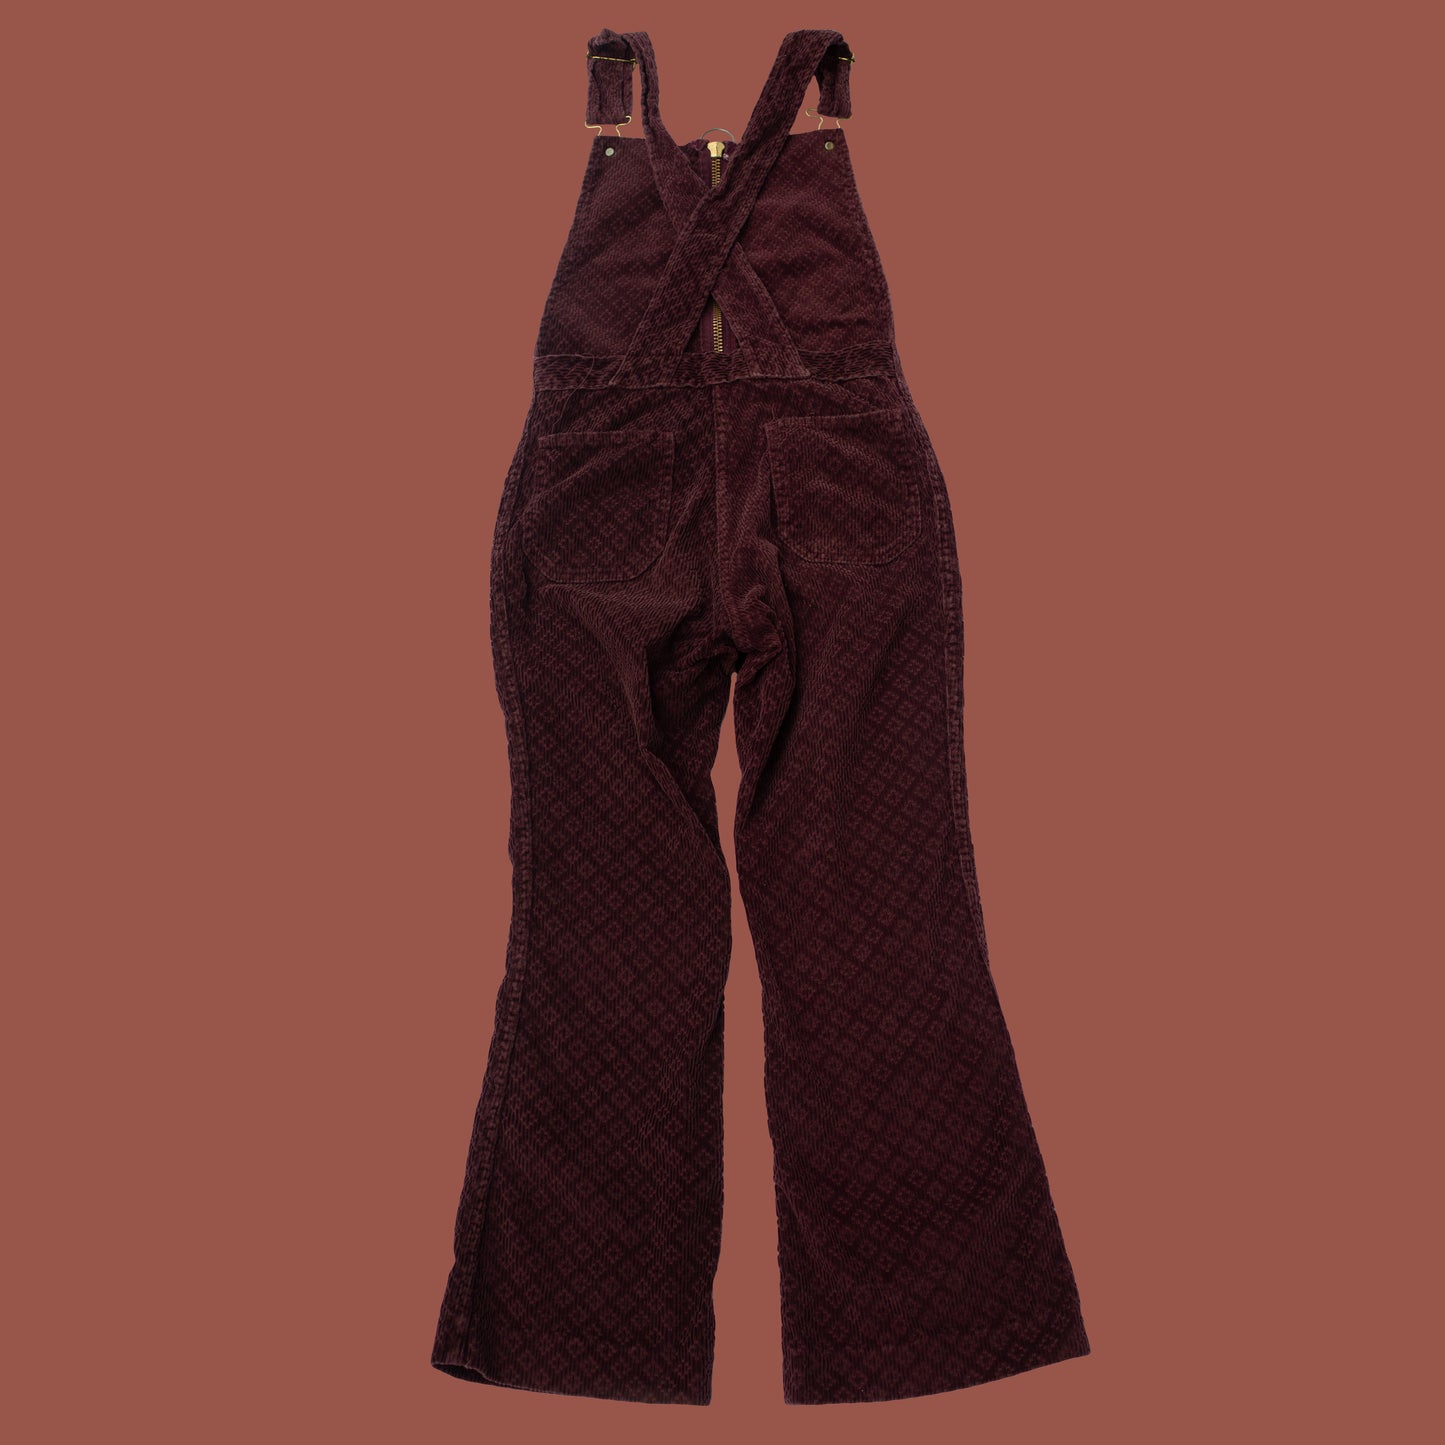 Vintage 1970s Corduroy O-Ring Zip Overalls Jumpsuit Male Denim